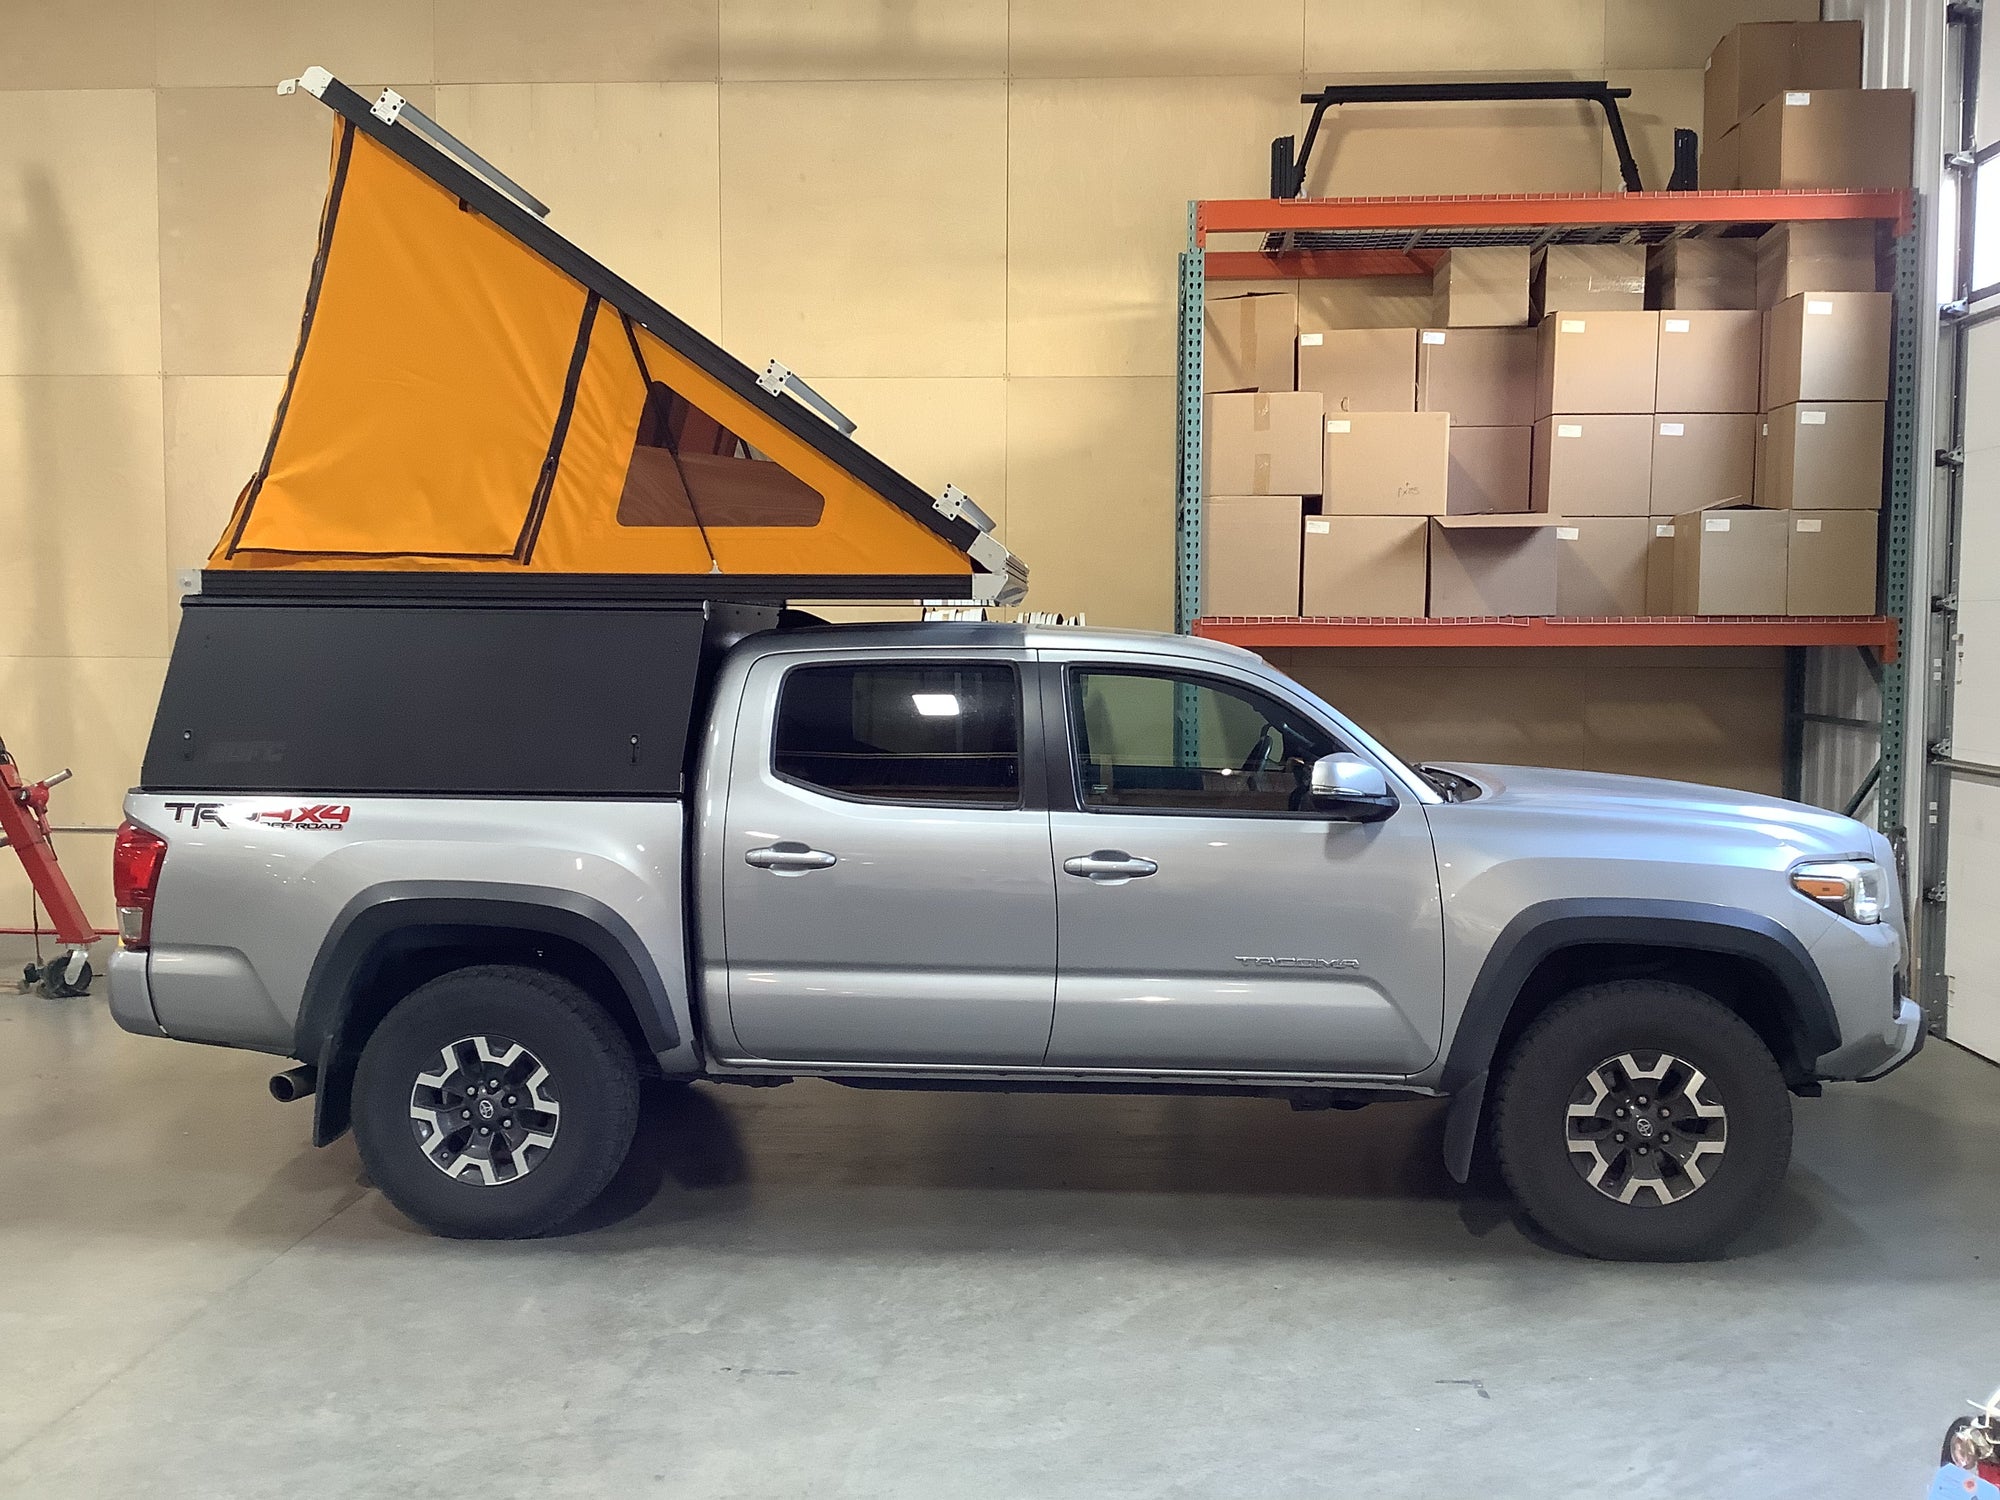 2017 Toyota Tacoma Camper - Build #4120